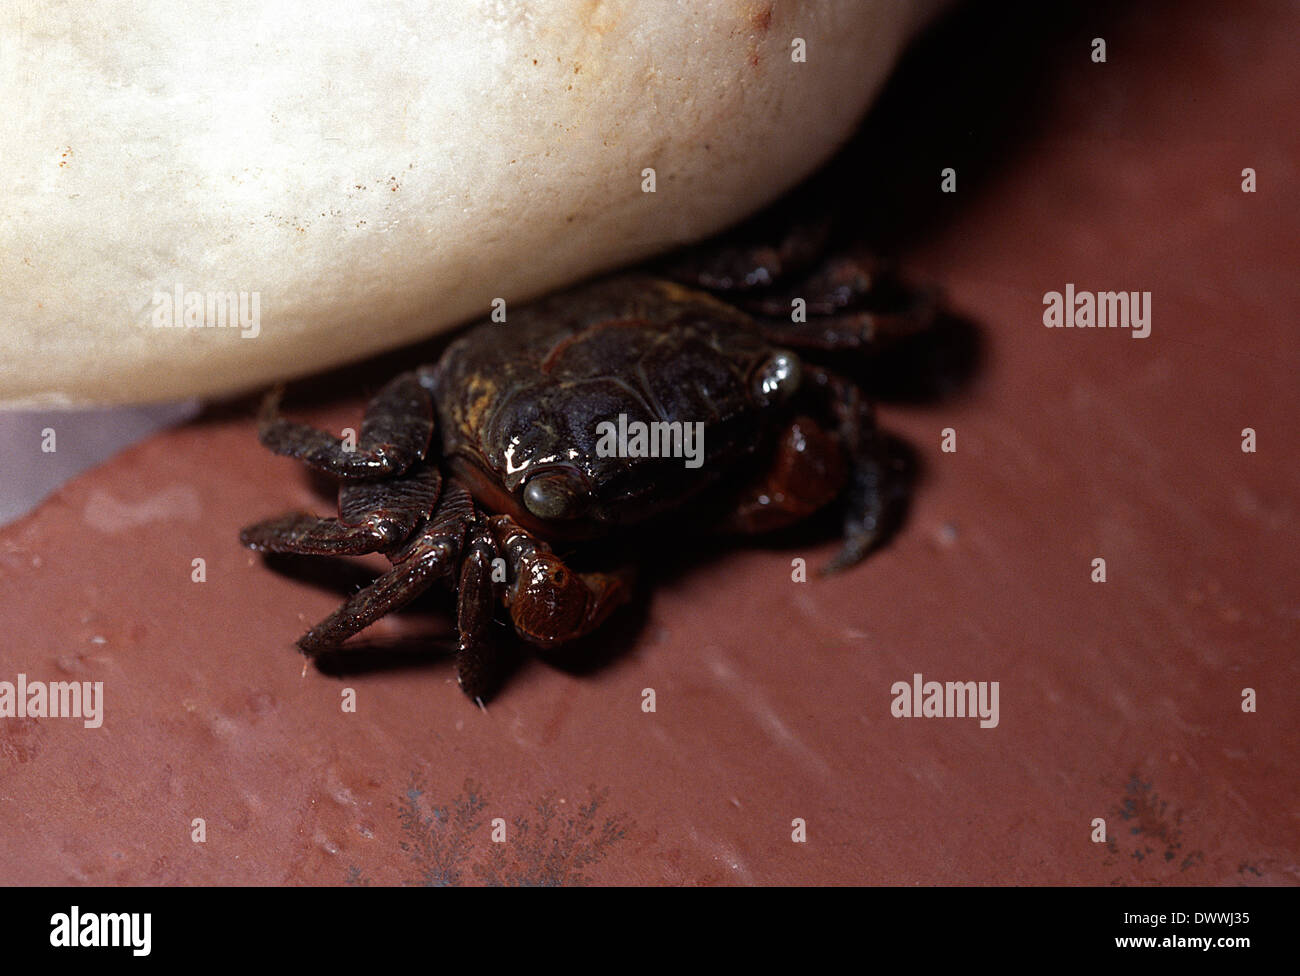 Sesarmid crab Sesarma intermedium, Grapsidae, Japan, Asia Stock Photo